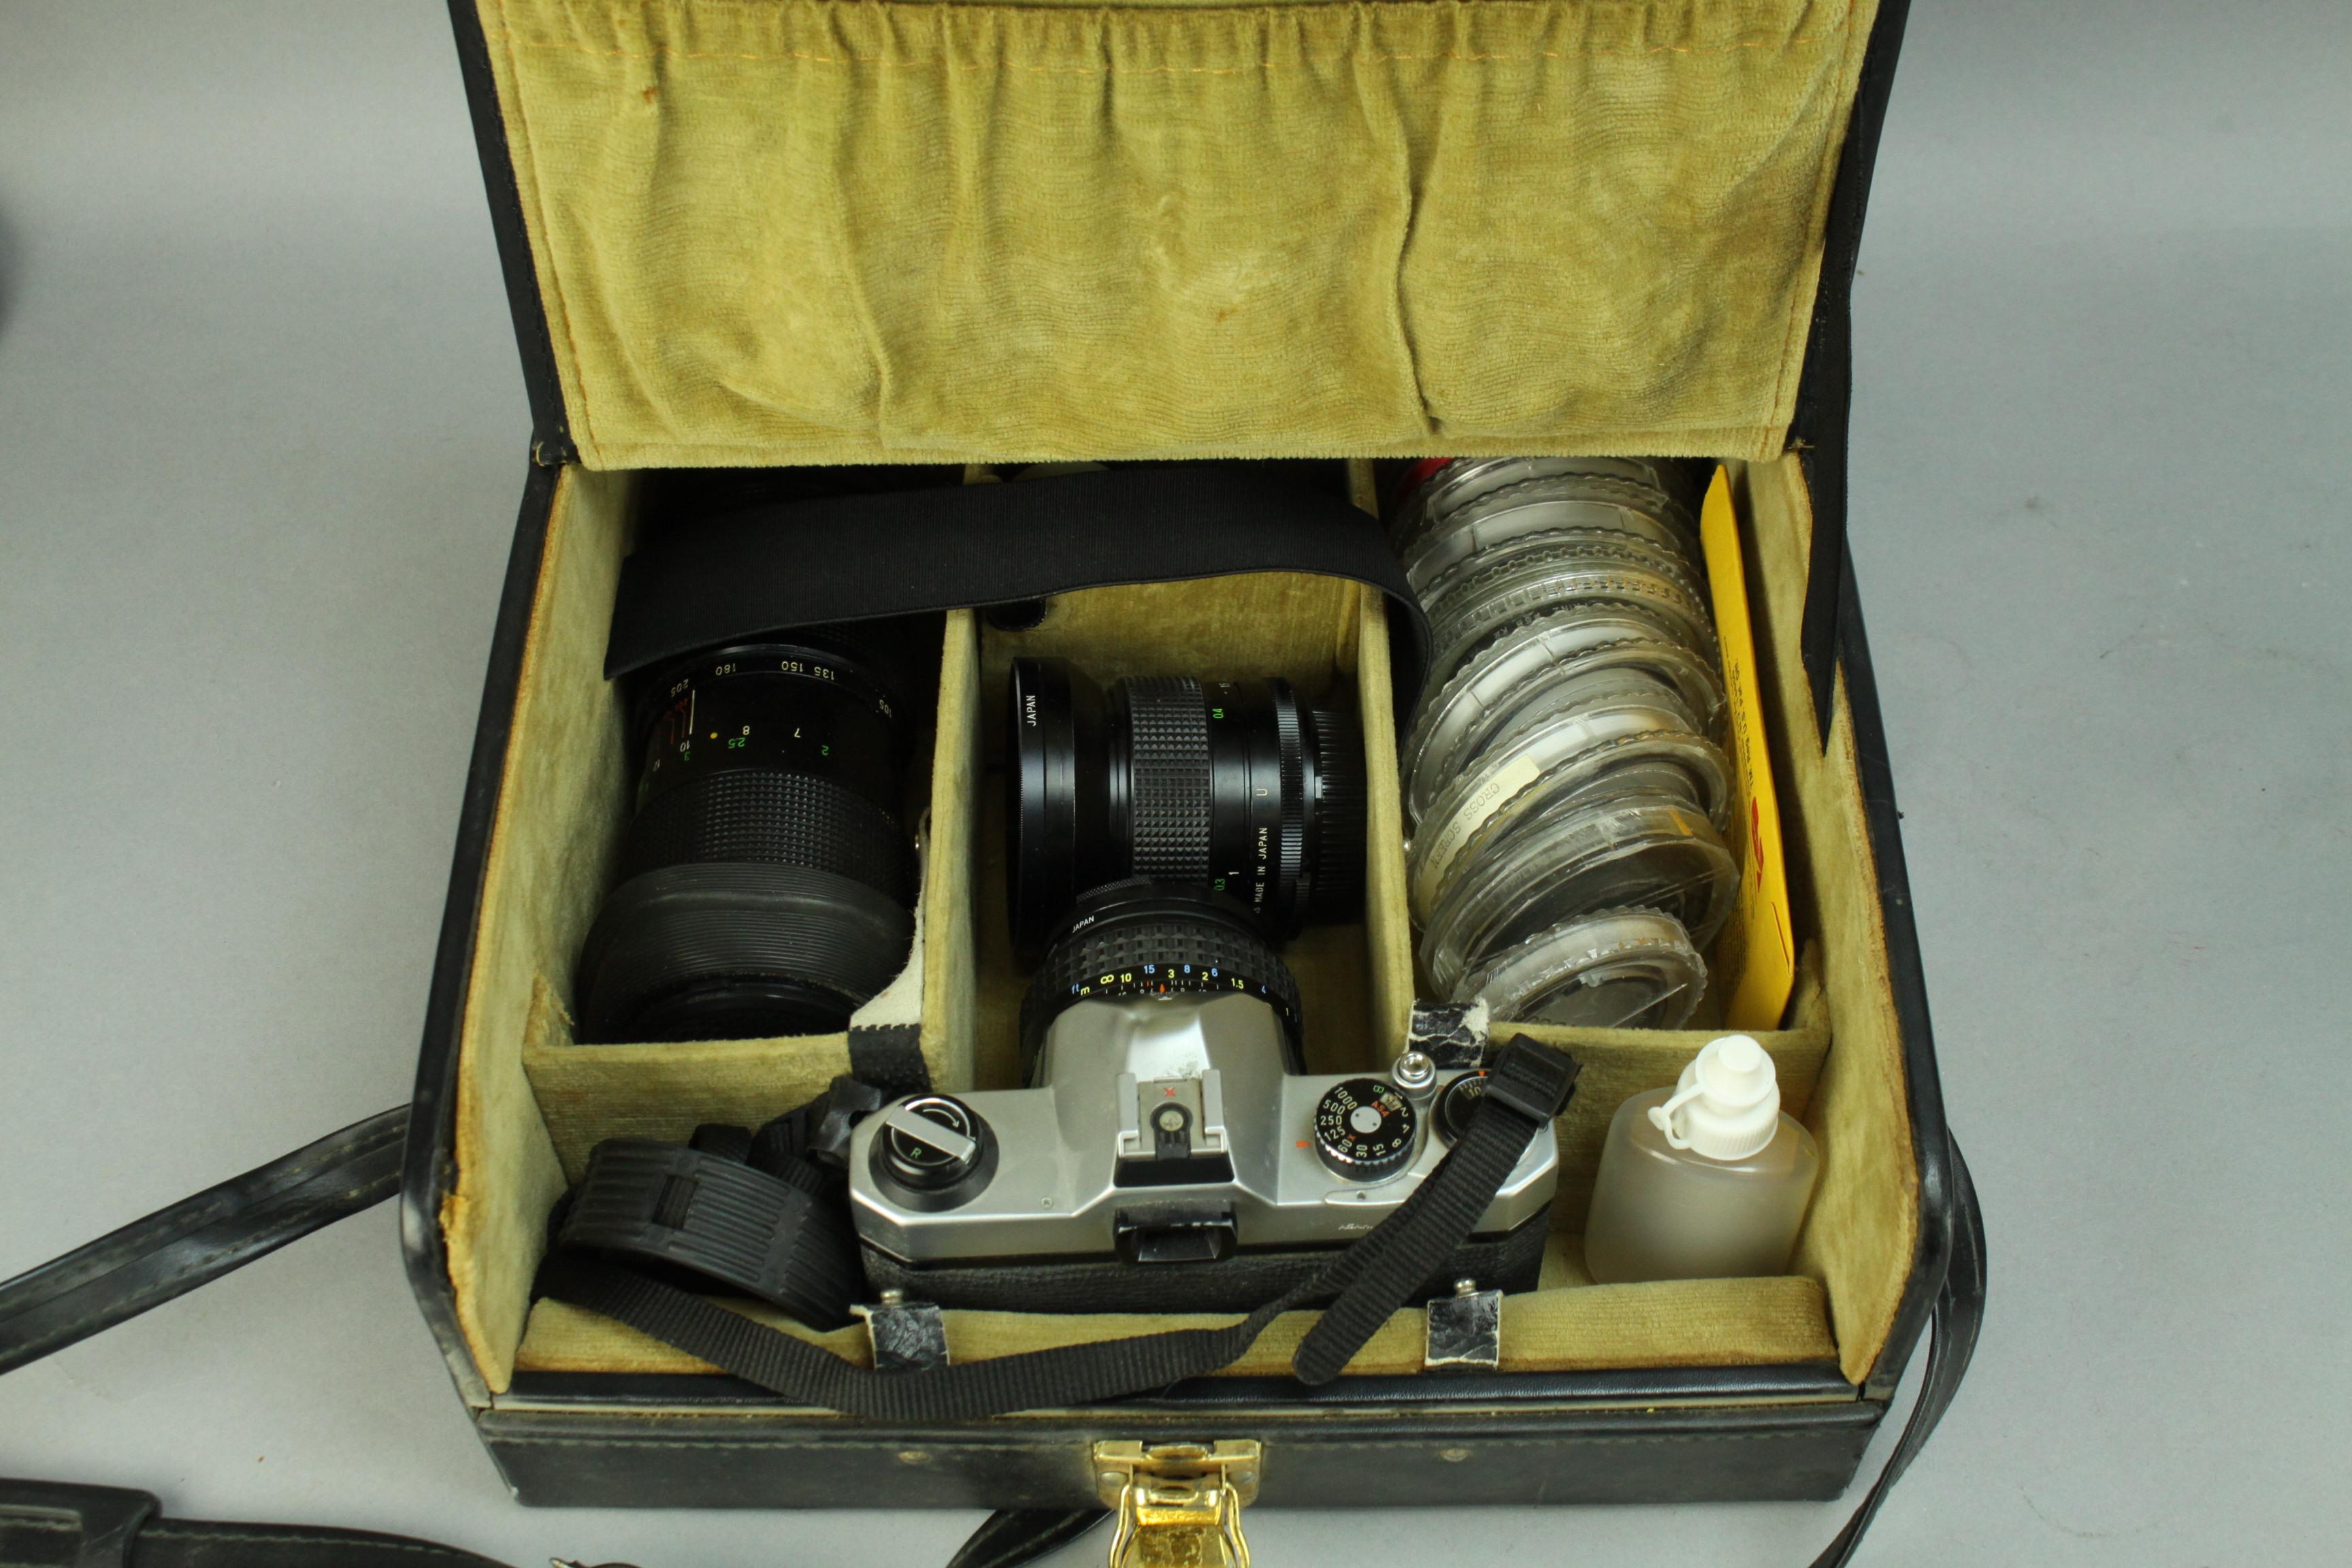 Vintage Pentax 35mm Film Camera Set